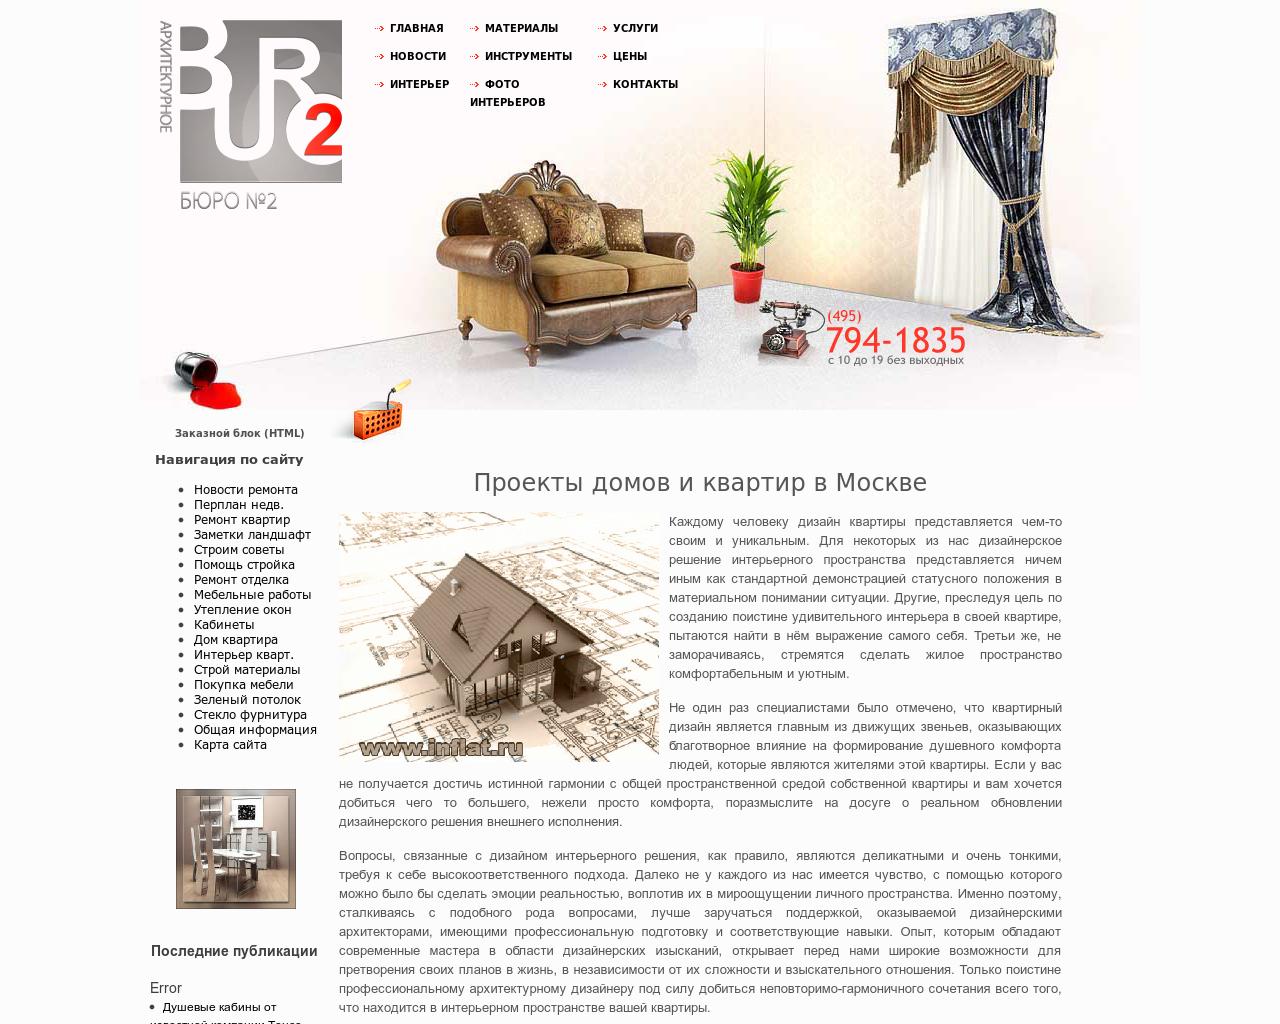 Изображение сайта inflat.ru в разрешении 1280x1024